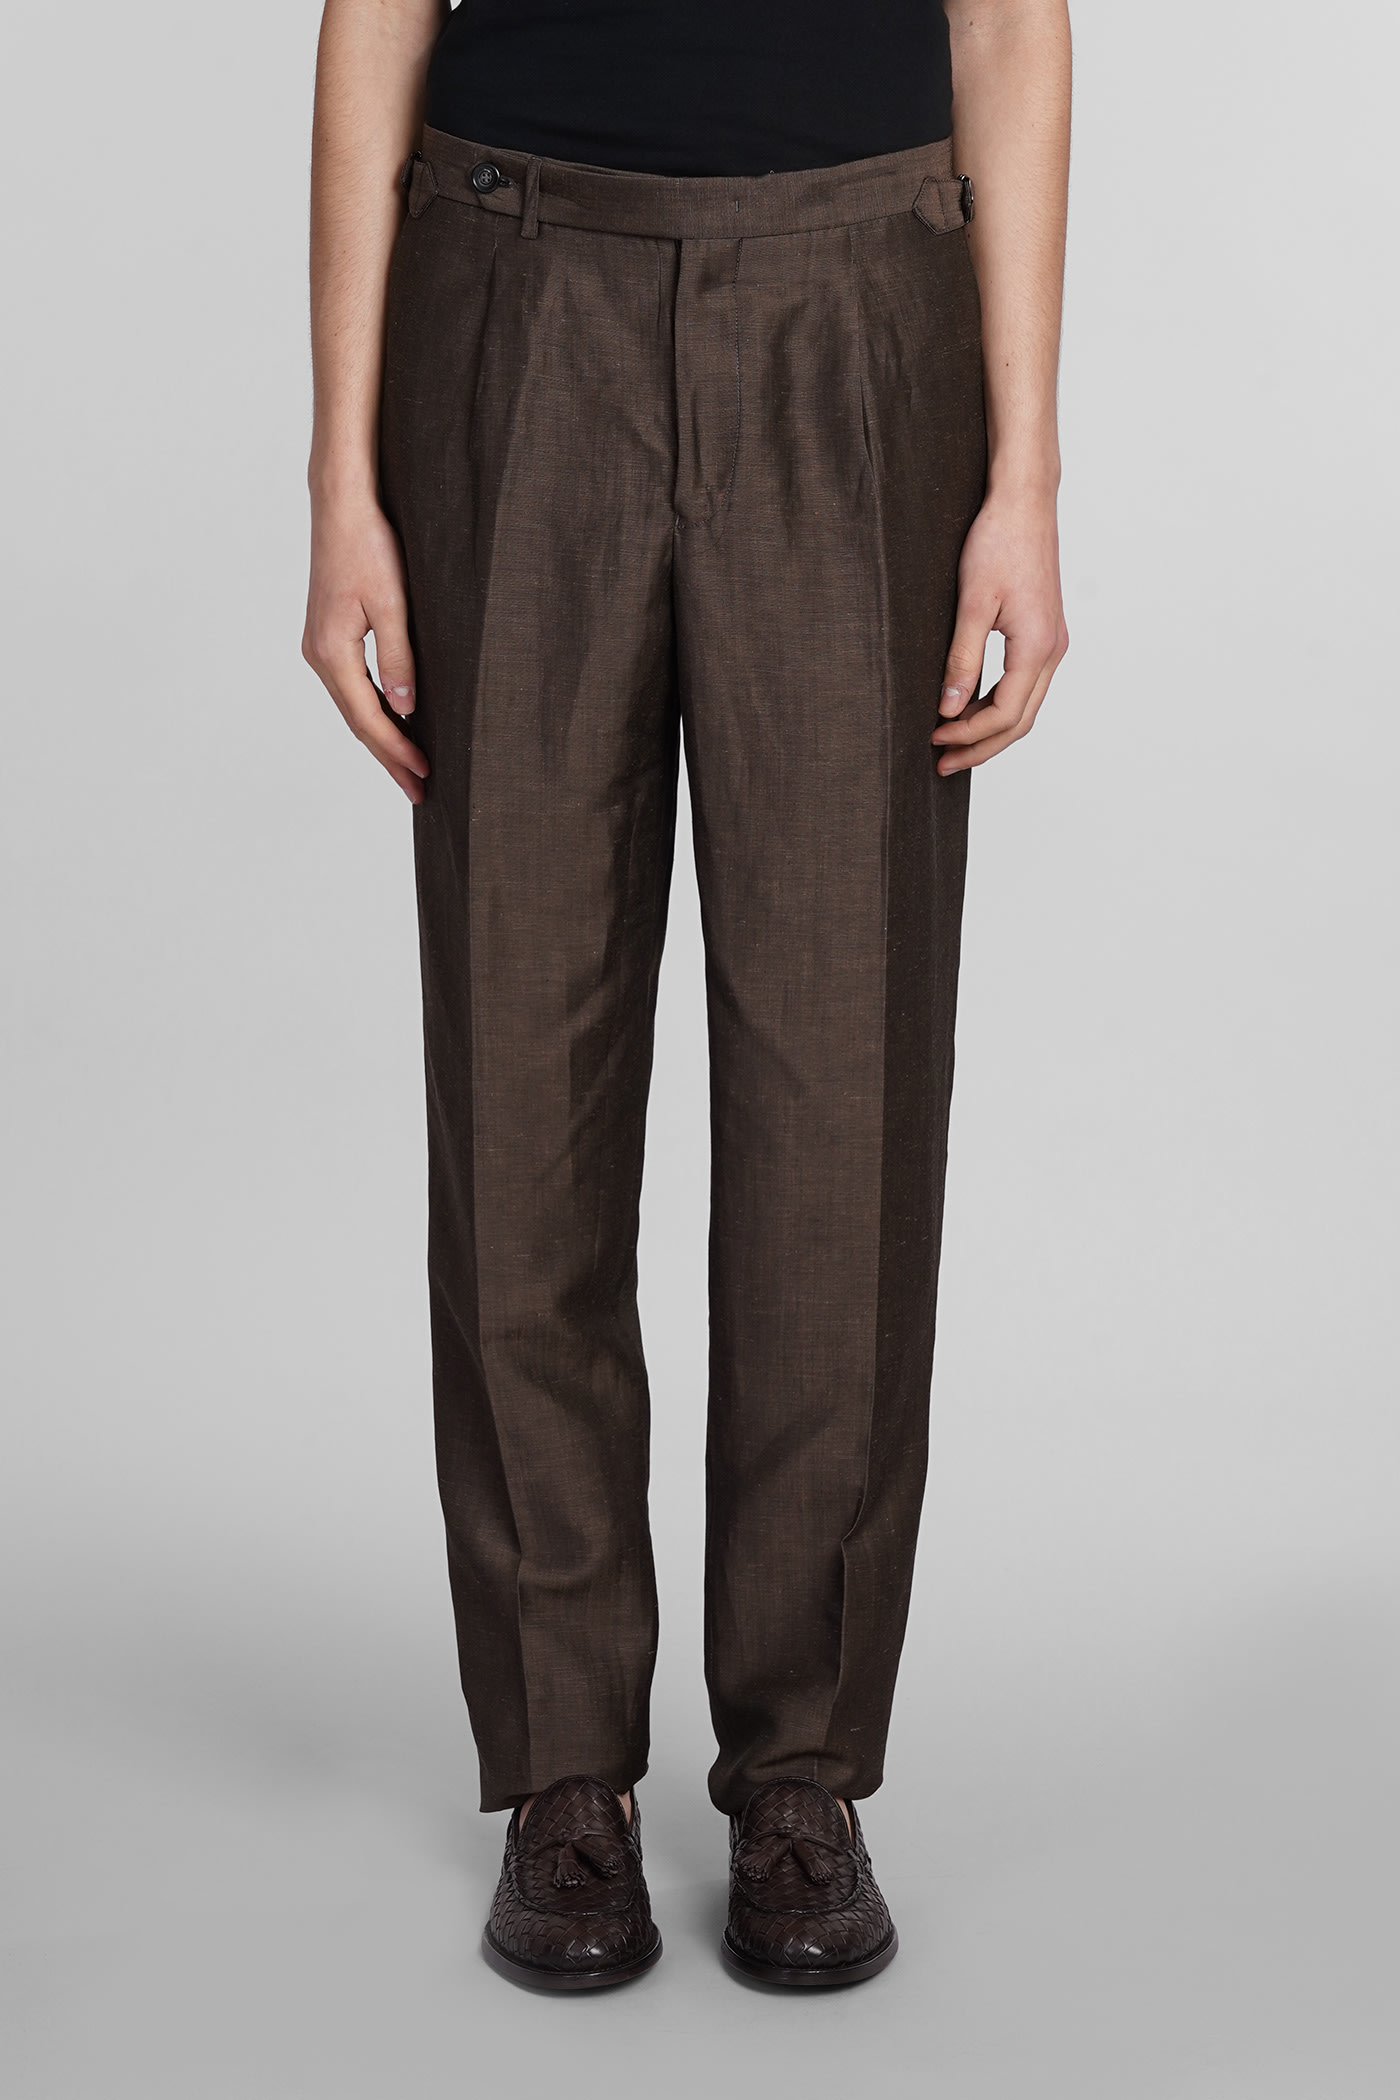 Emporio Armani Pants In Brown Wool